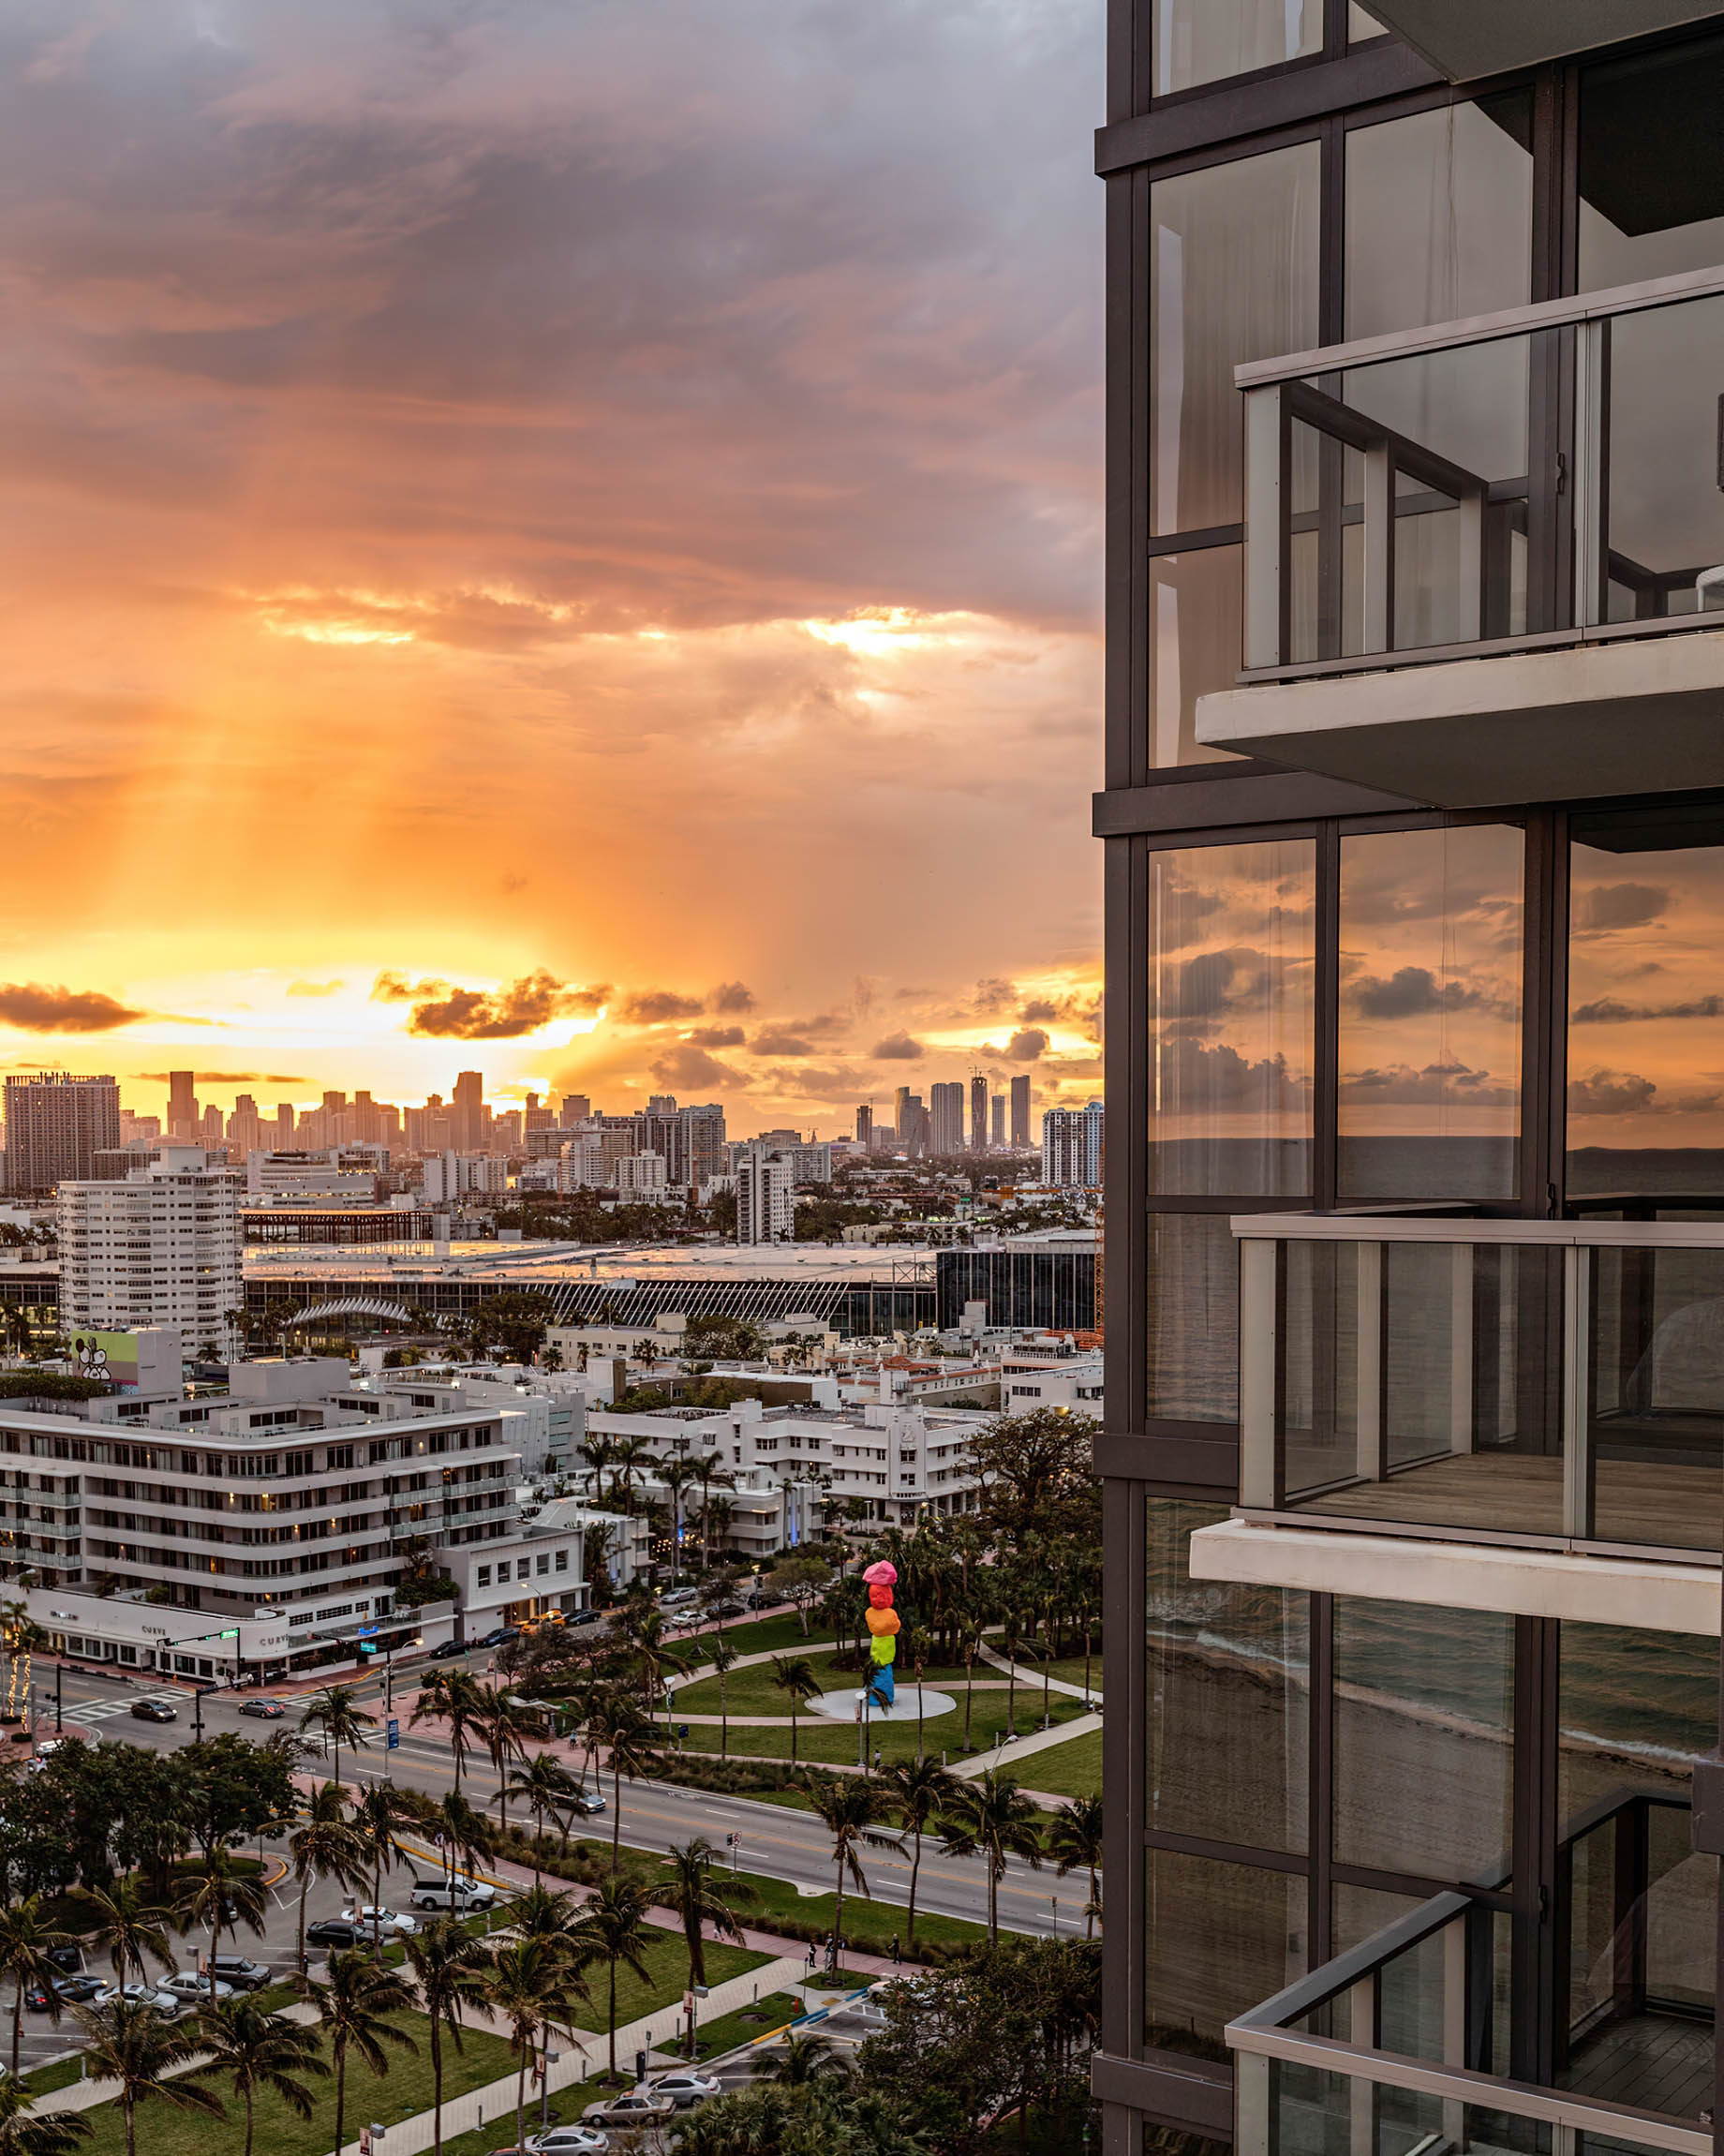 W South Beach Hotel – Miami Beach, FL, USA – Sunset City View